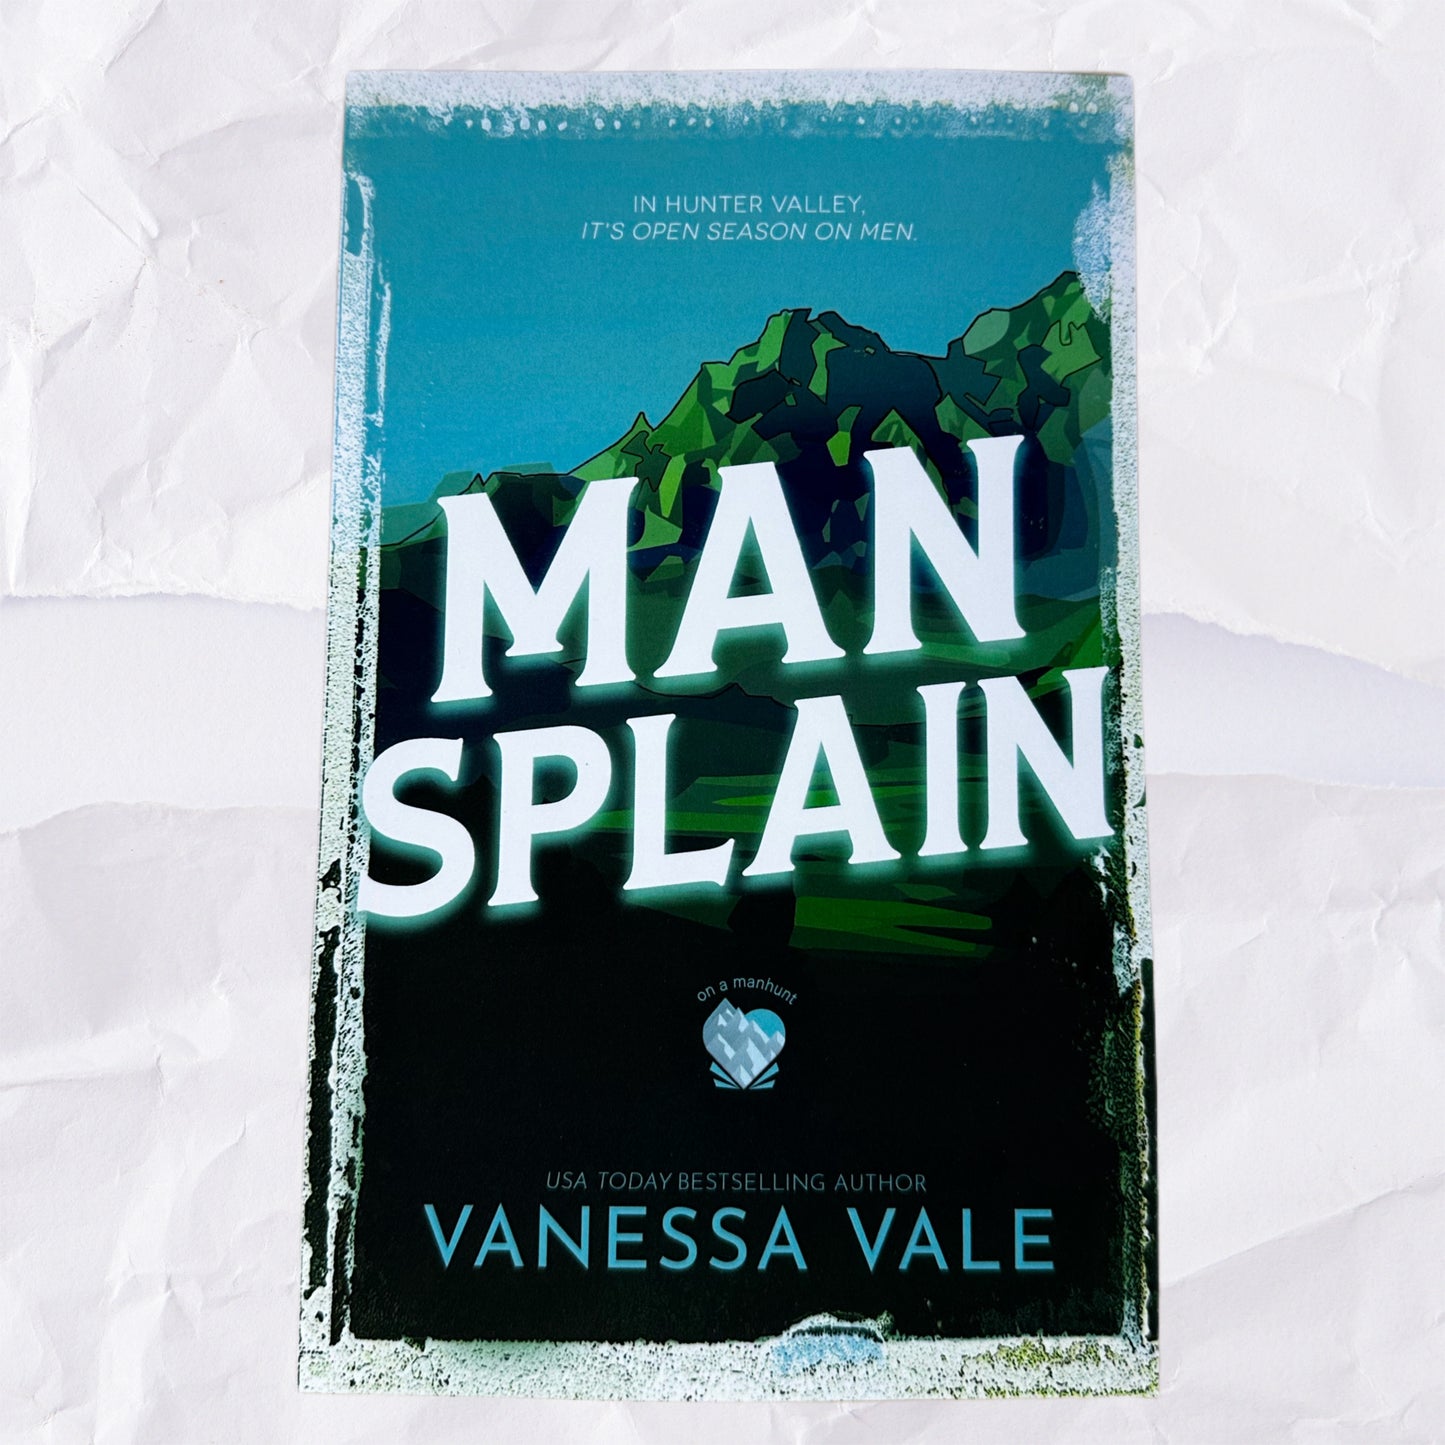 Man Splain (On a Manhunt #4) by Vanessa Vale